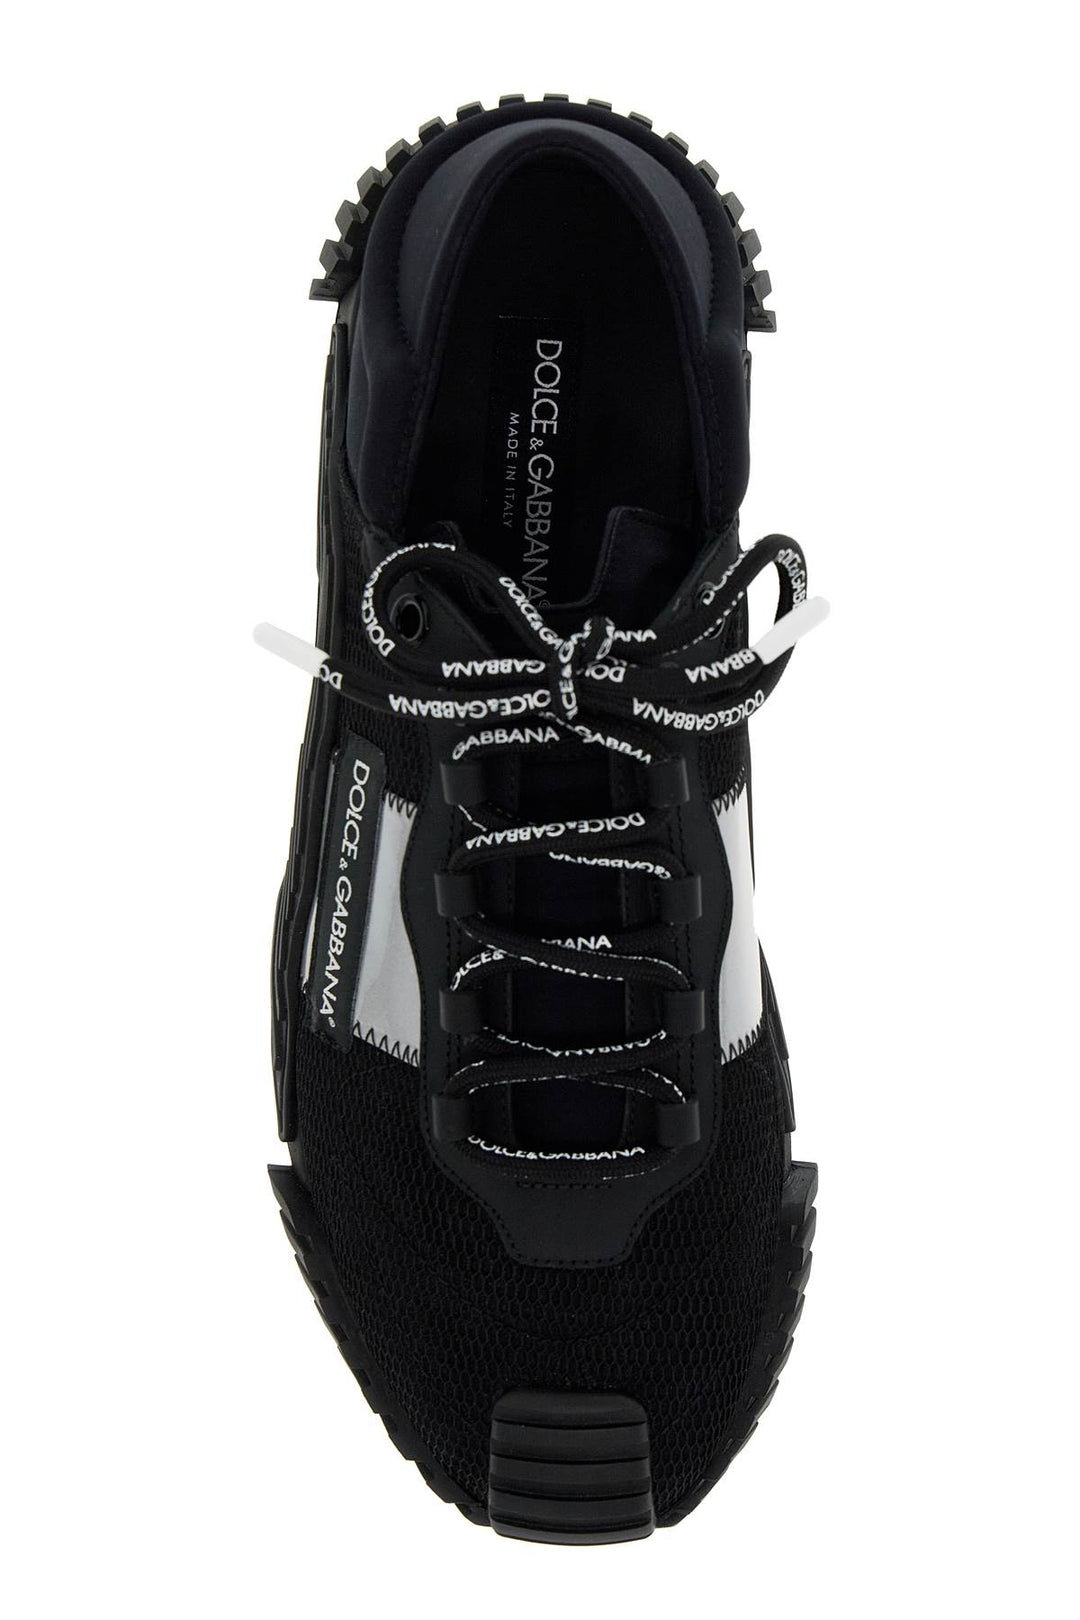 Dolce & Gabbana Neoprene Ns1 Sneakers   Black